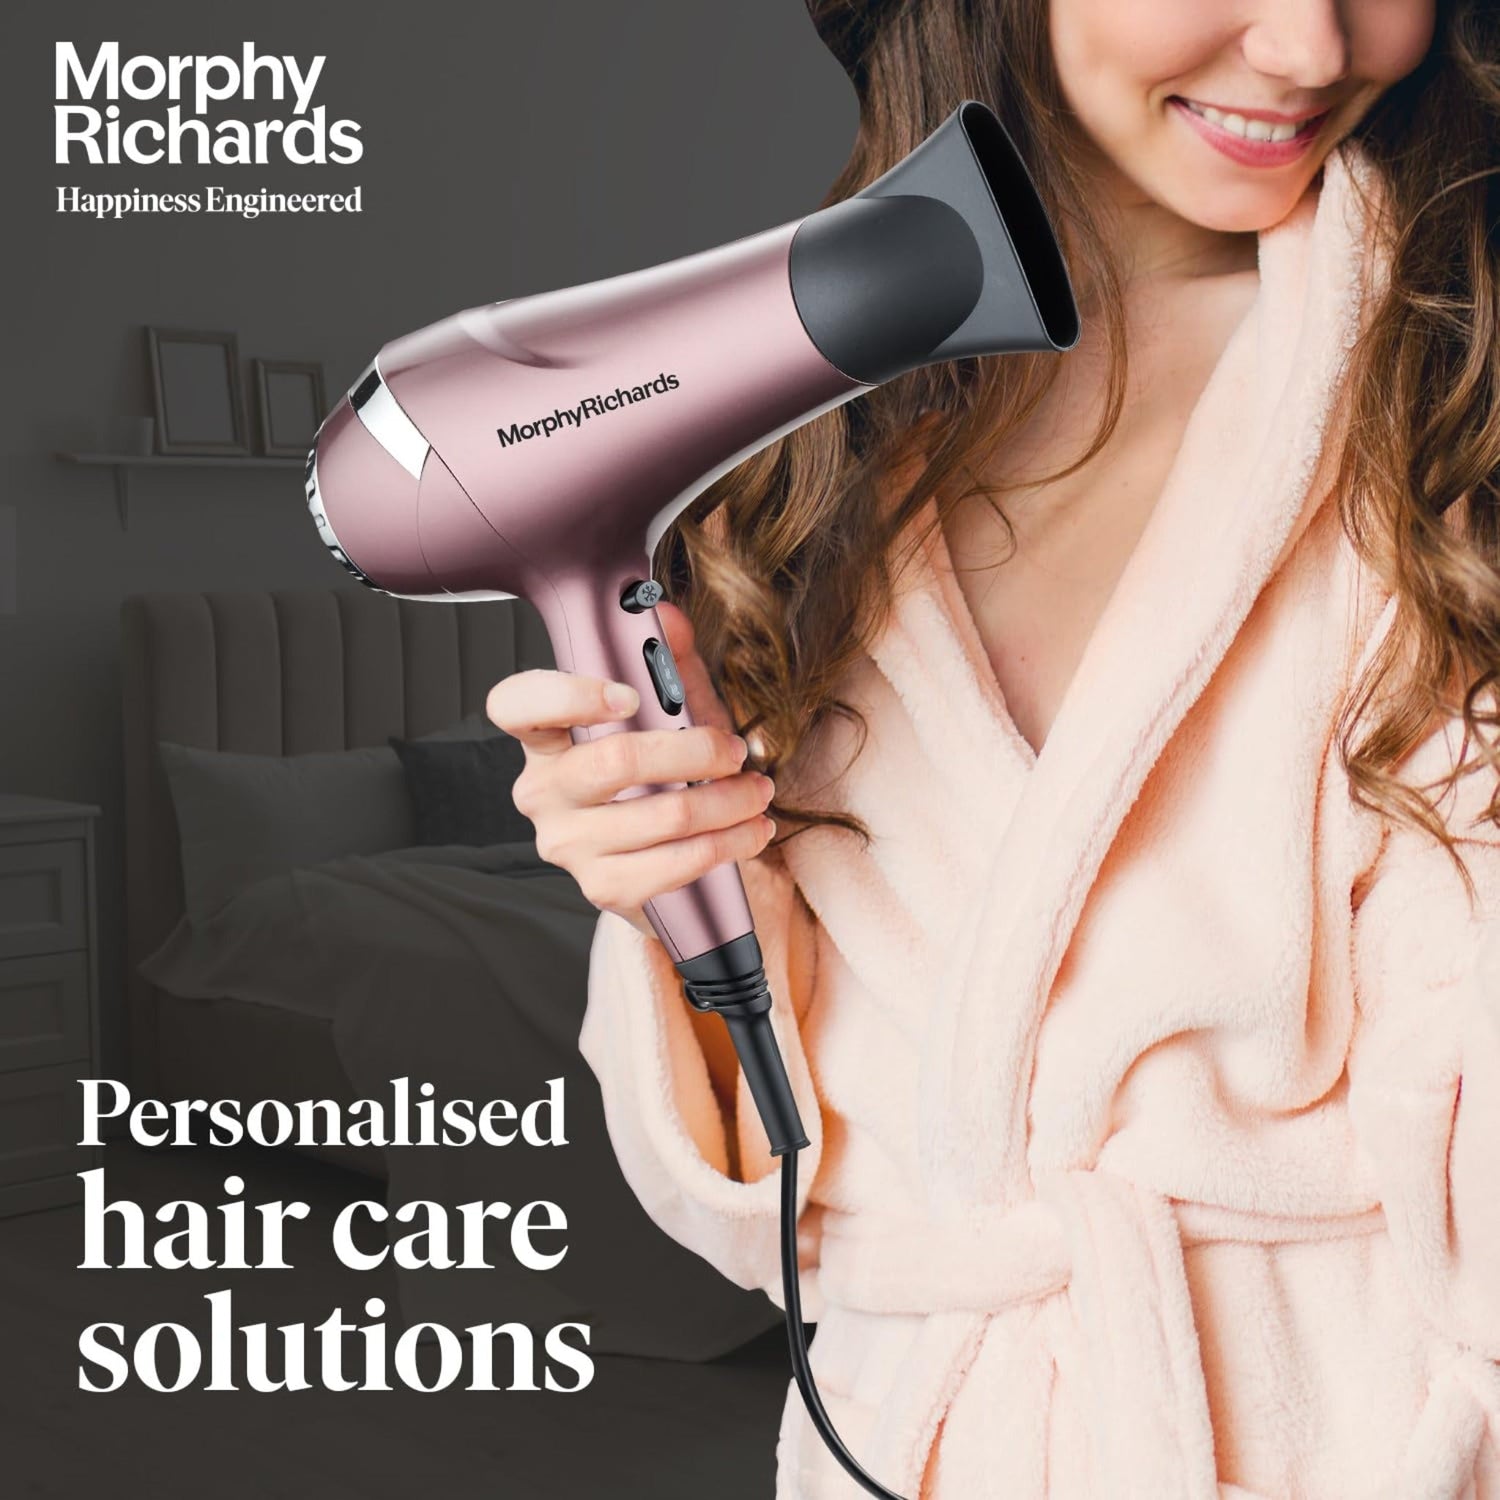 Morphy Richards StylistCare 2200W Hair Dryer